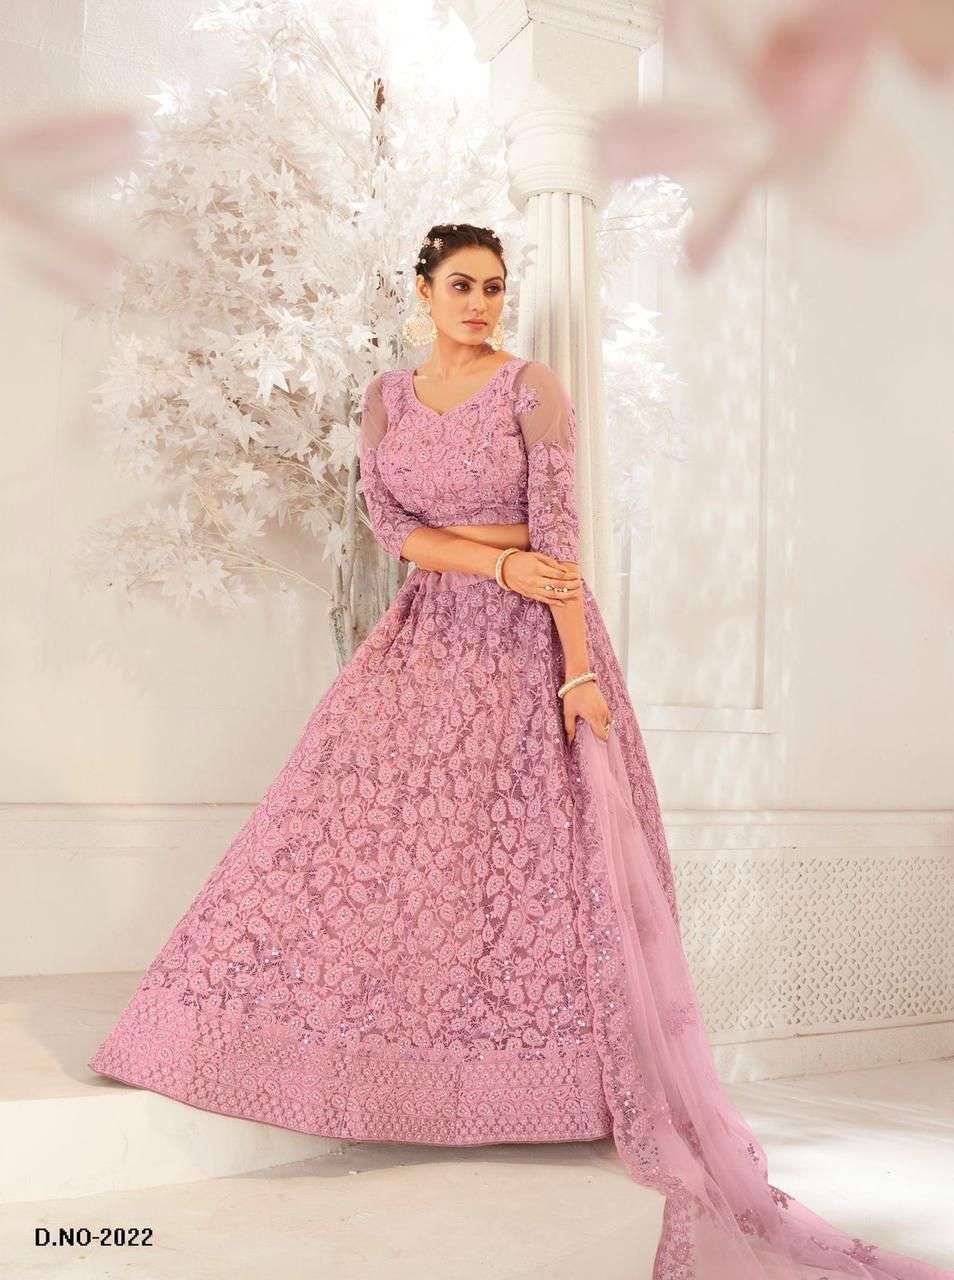 Party Wear Designer Lehenga With Beautiful Dupatta Set Modern Style Choli  Women | eBay